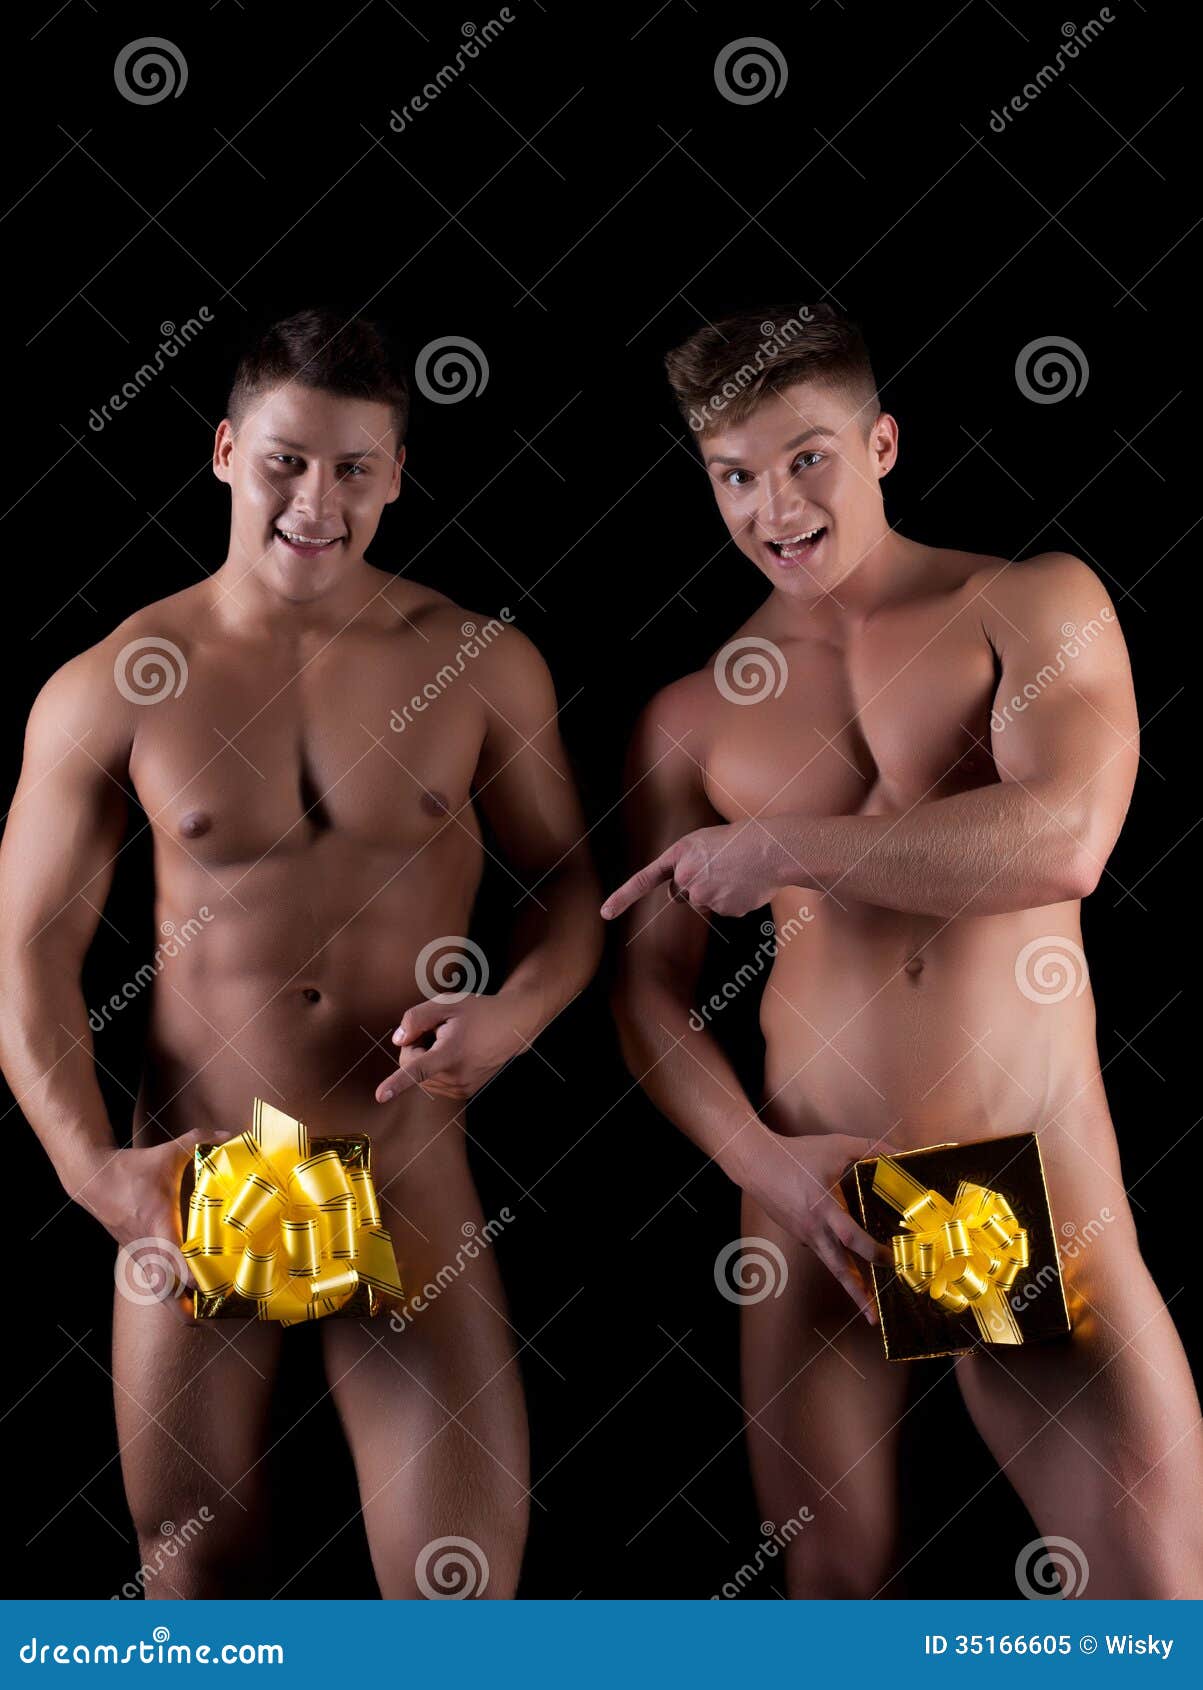 реклама сумок голыми мужиками фото 98